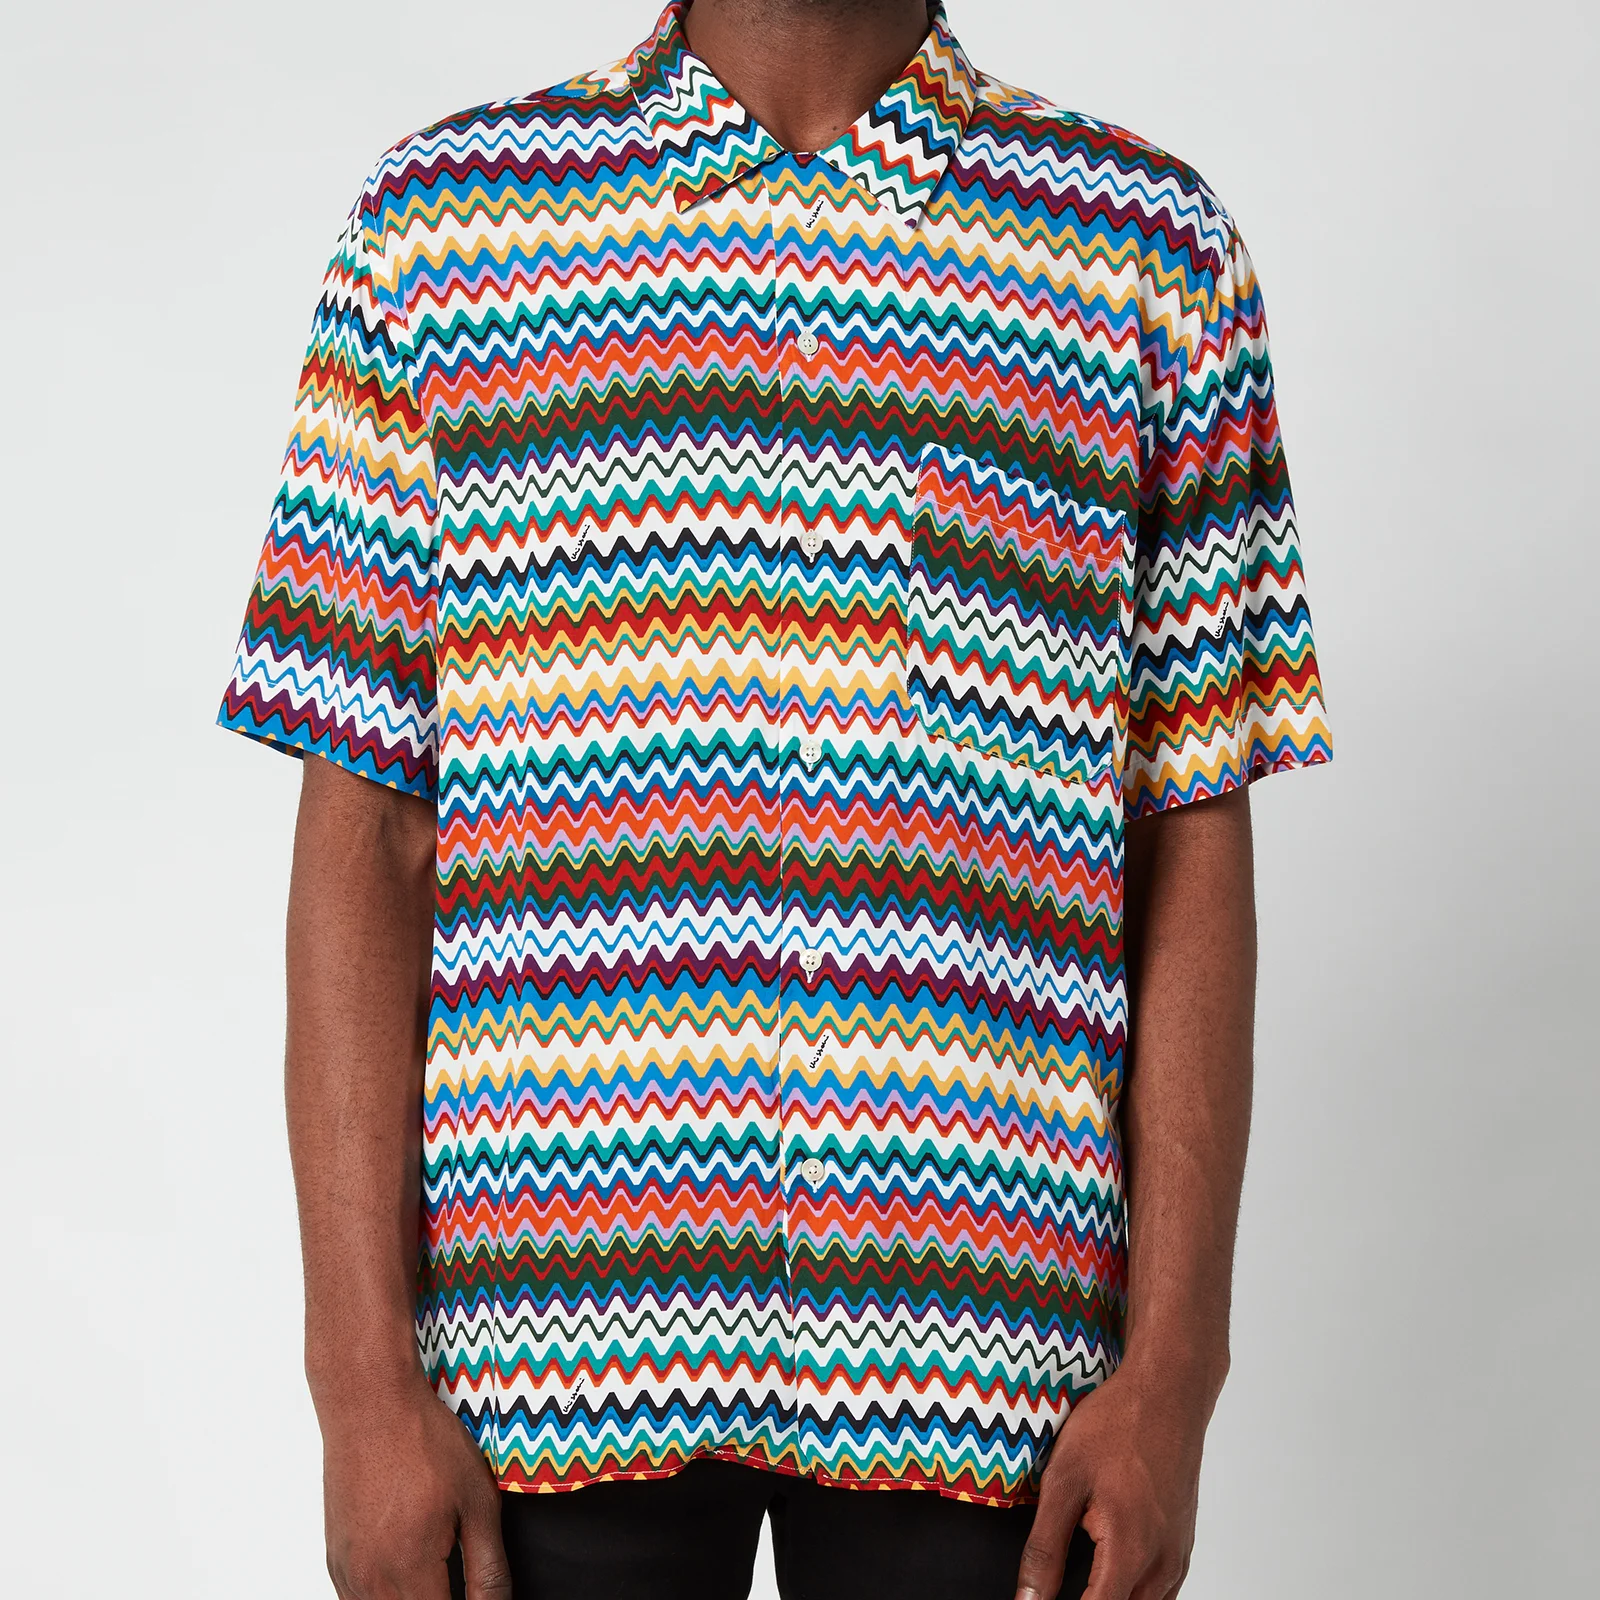 Missoni Men's Classic Neckline Short Sleeve Shirt - Multi Image 1